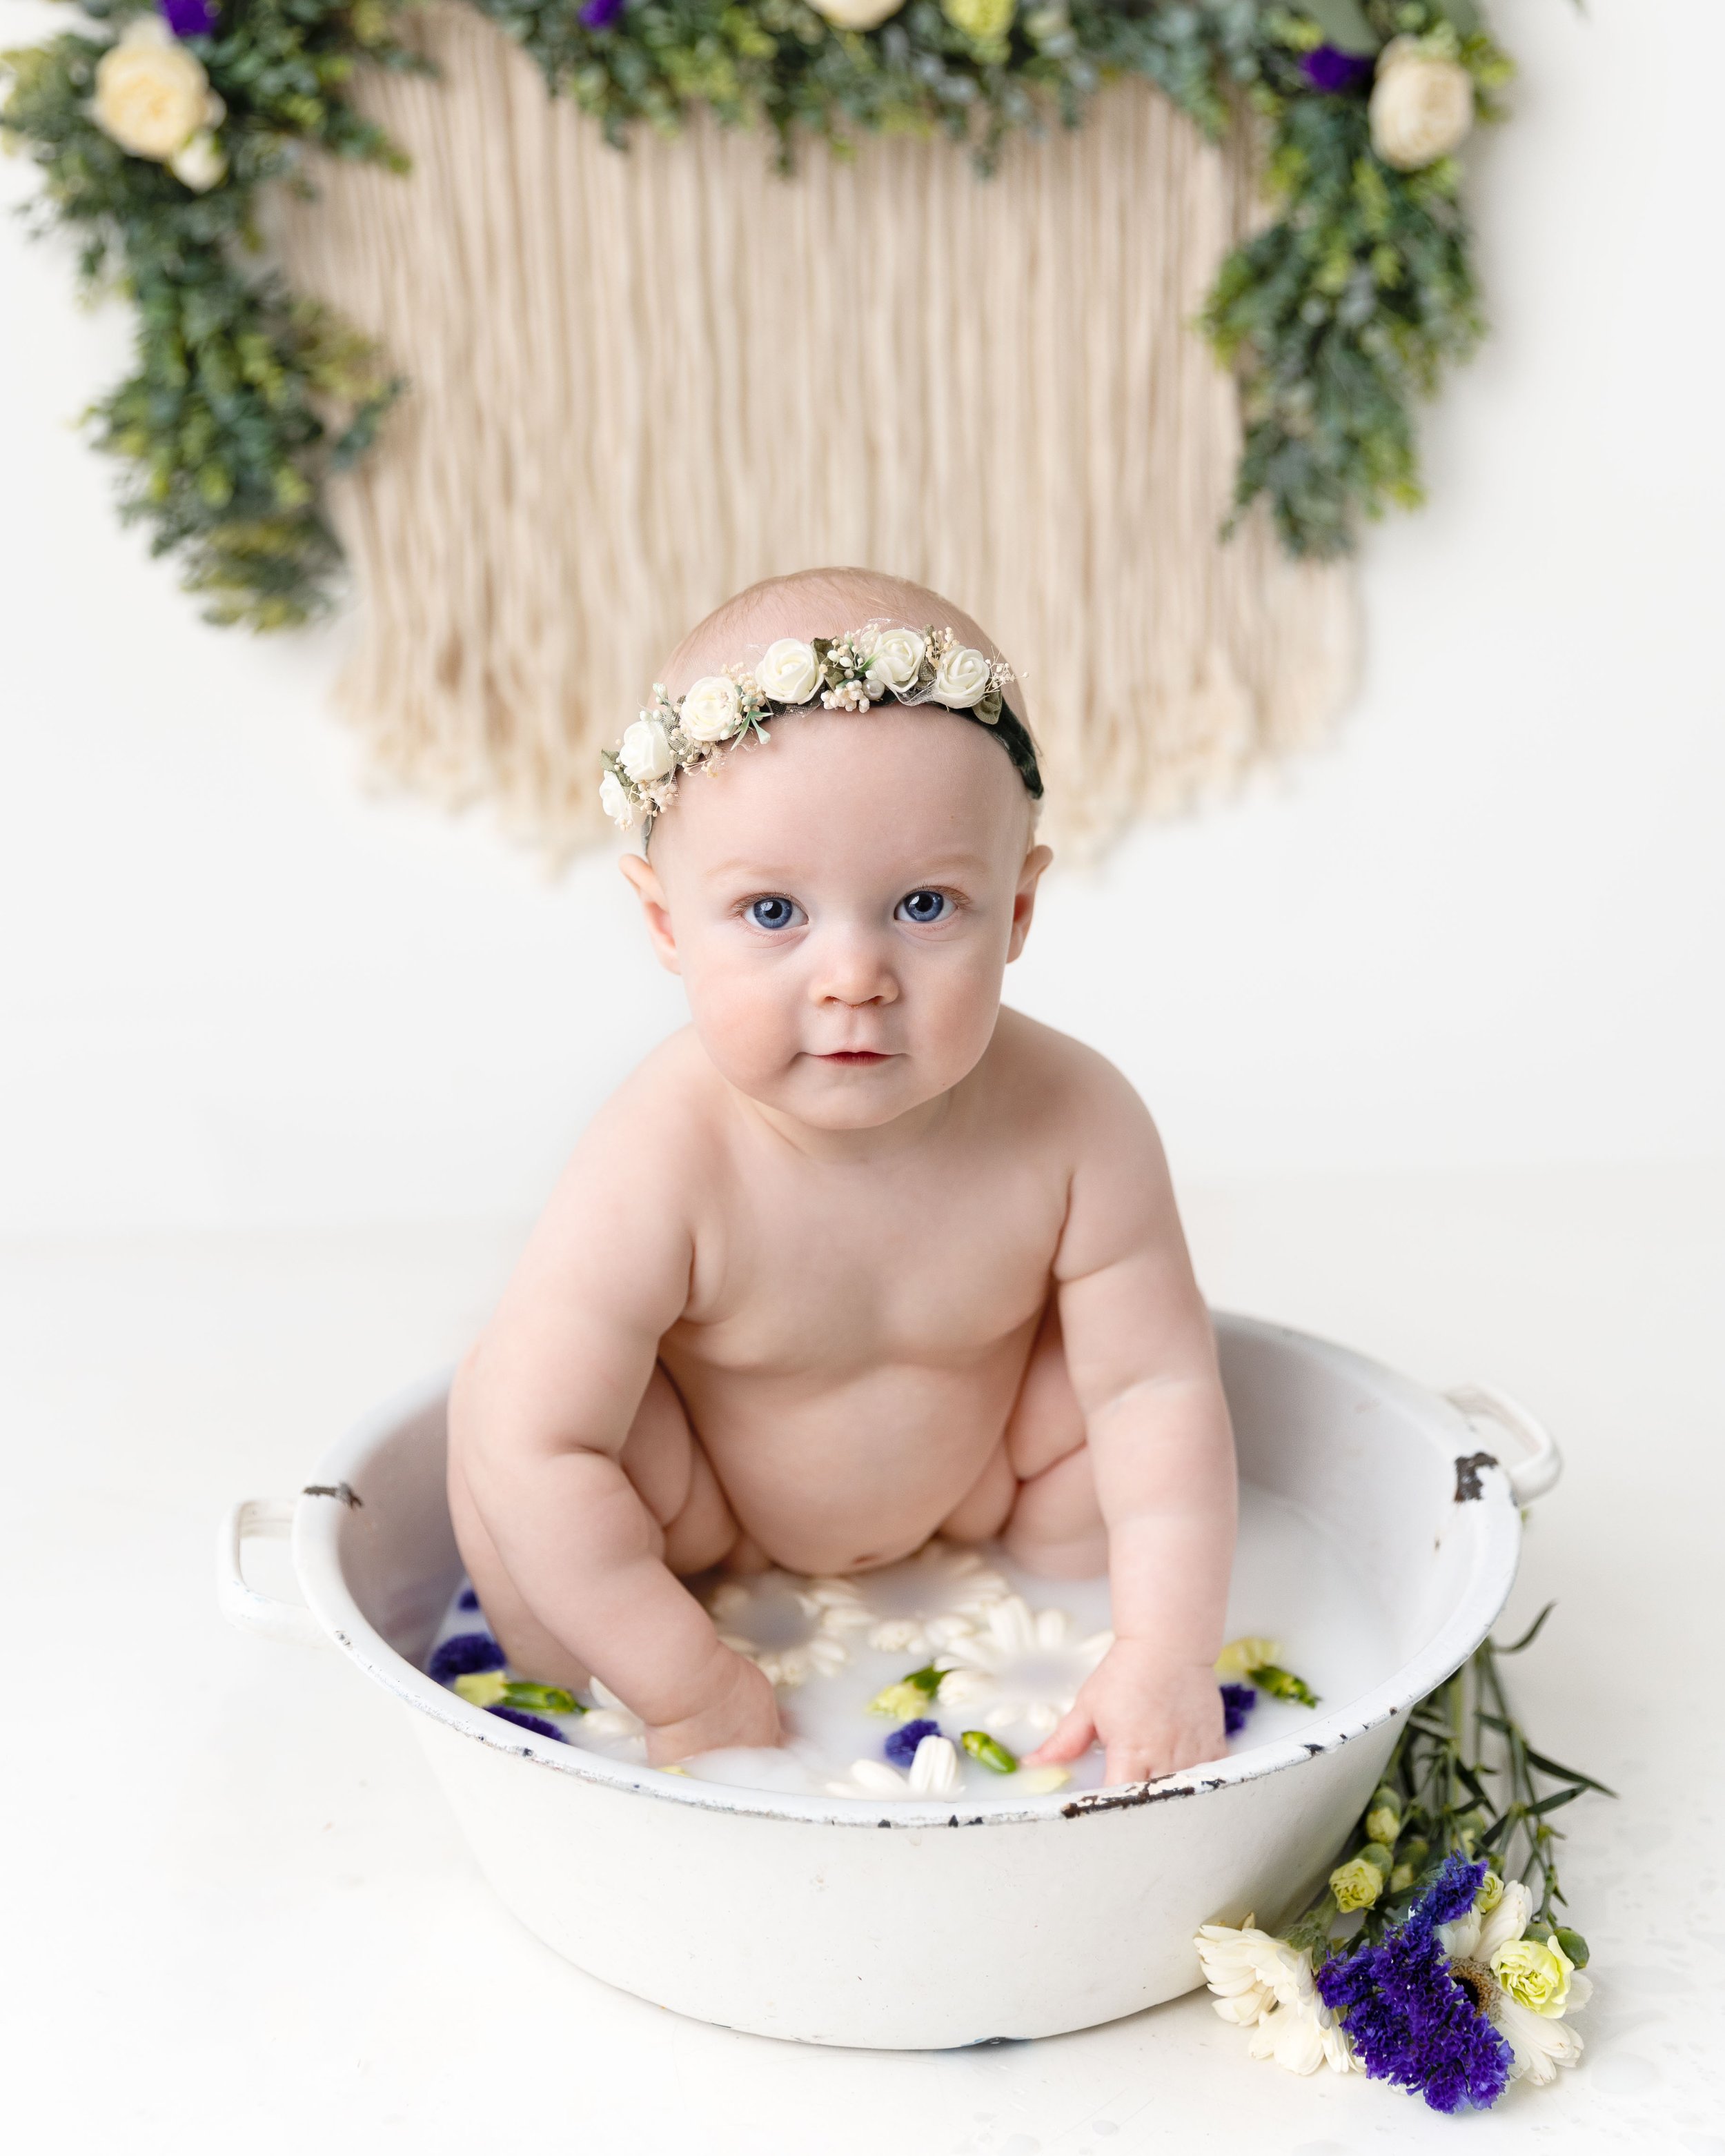 milk-bath-photos-birthday-images-baby-images-newborn-photography-spokane-washington-6.jpg